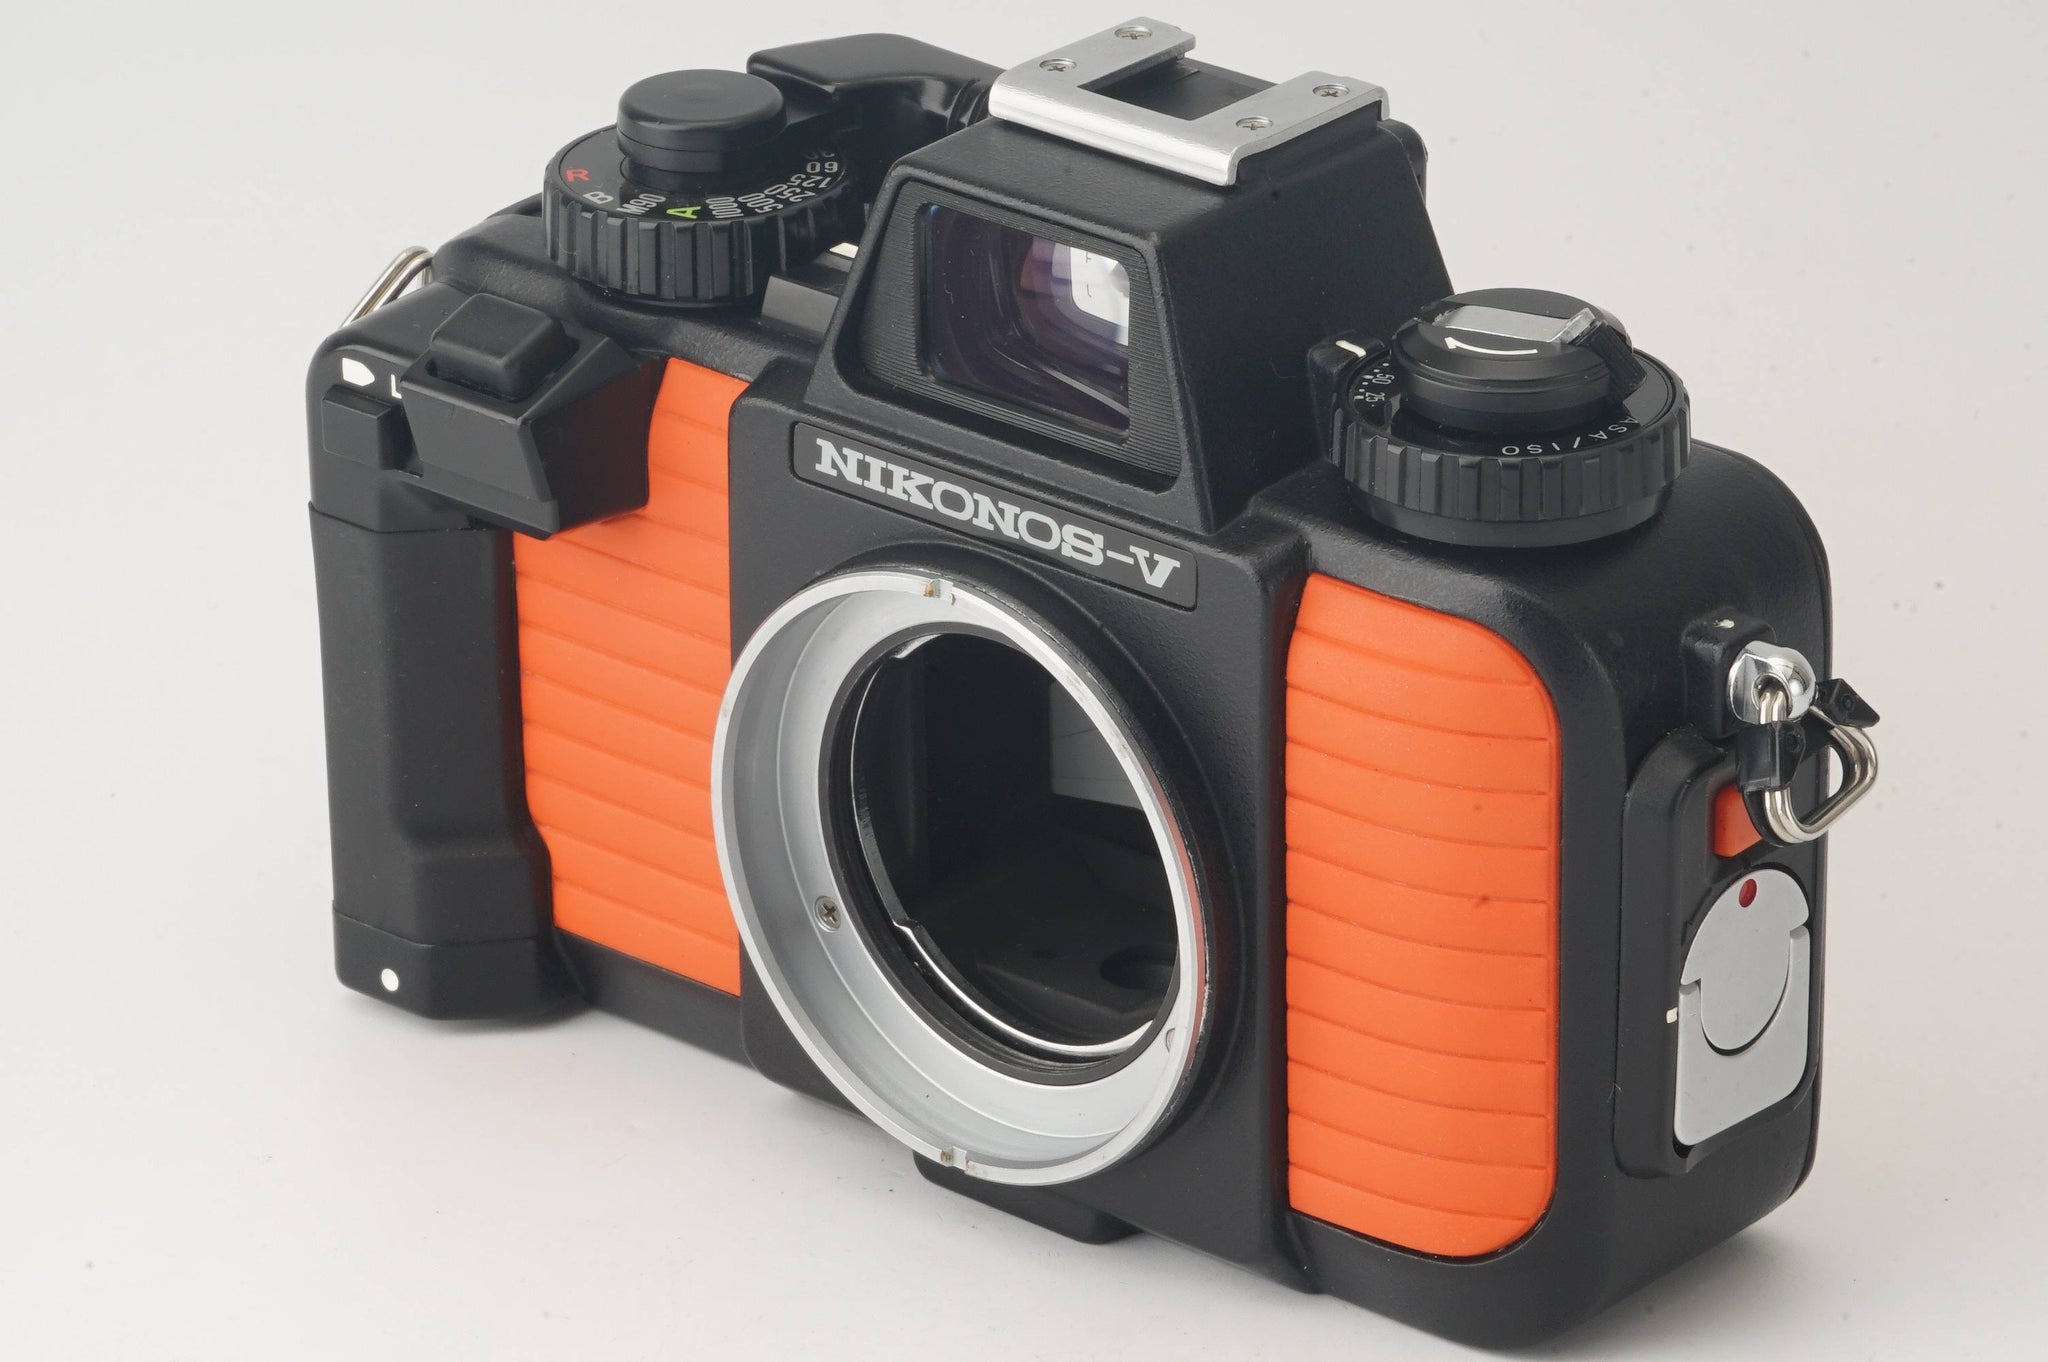 Nikon Nikonos V オレンジ 水中 フィルムカメラ ニコノス ニコン